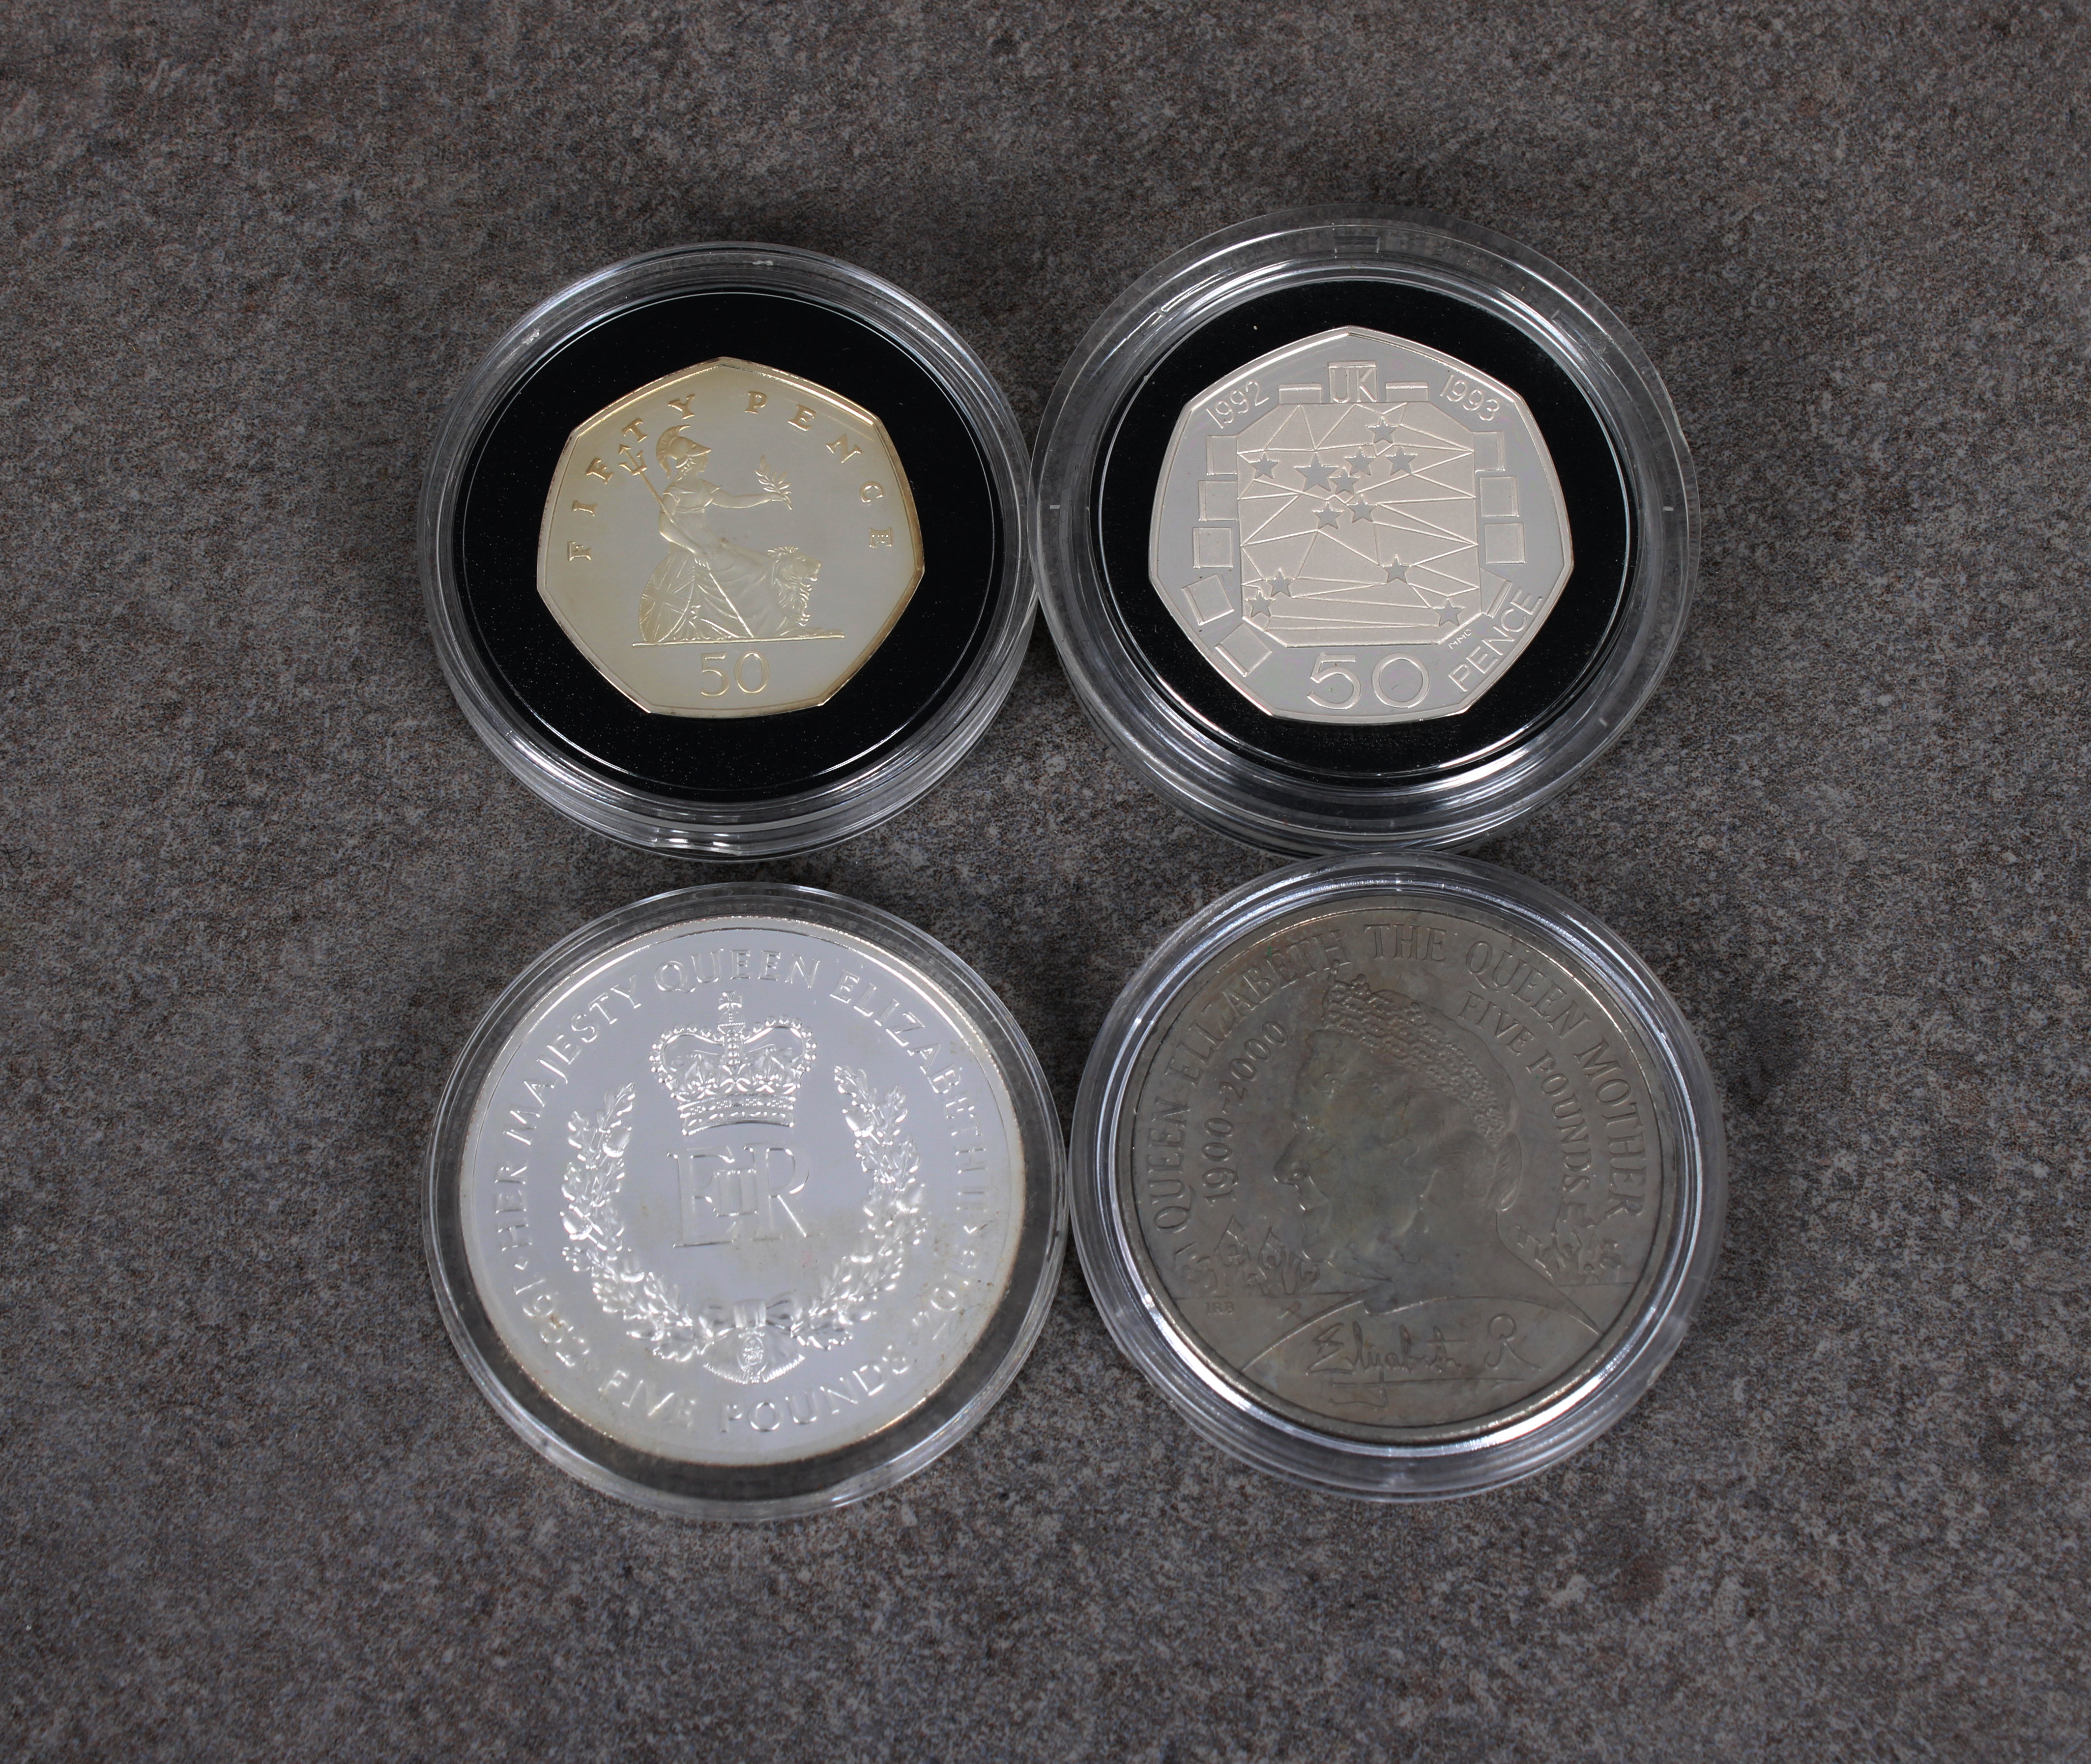 Four United Kingdom commemorative silver coins